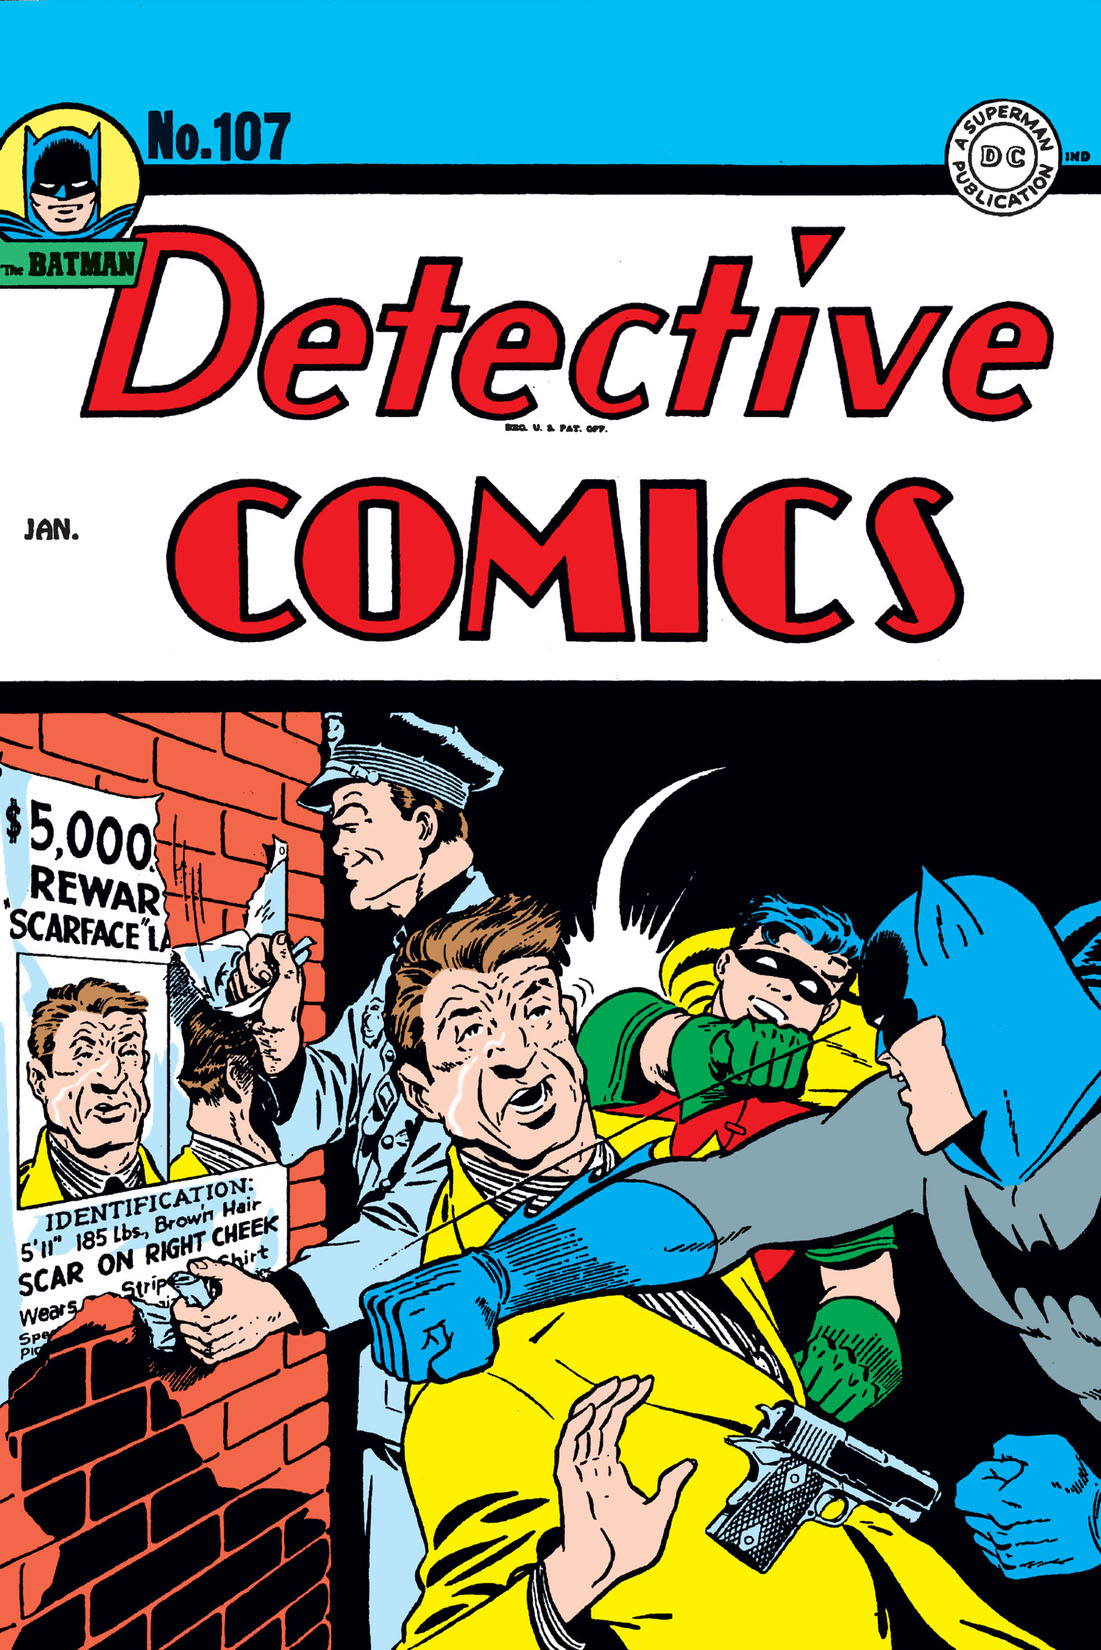 Detective Comics (1937-) #107 preview images